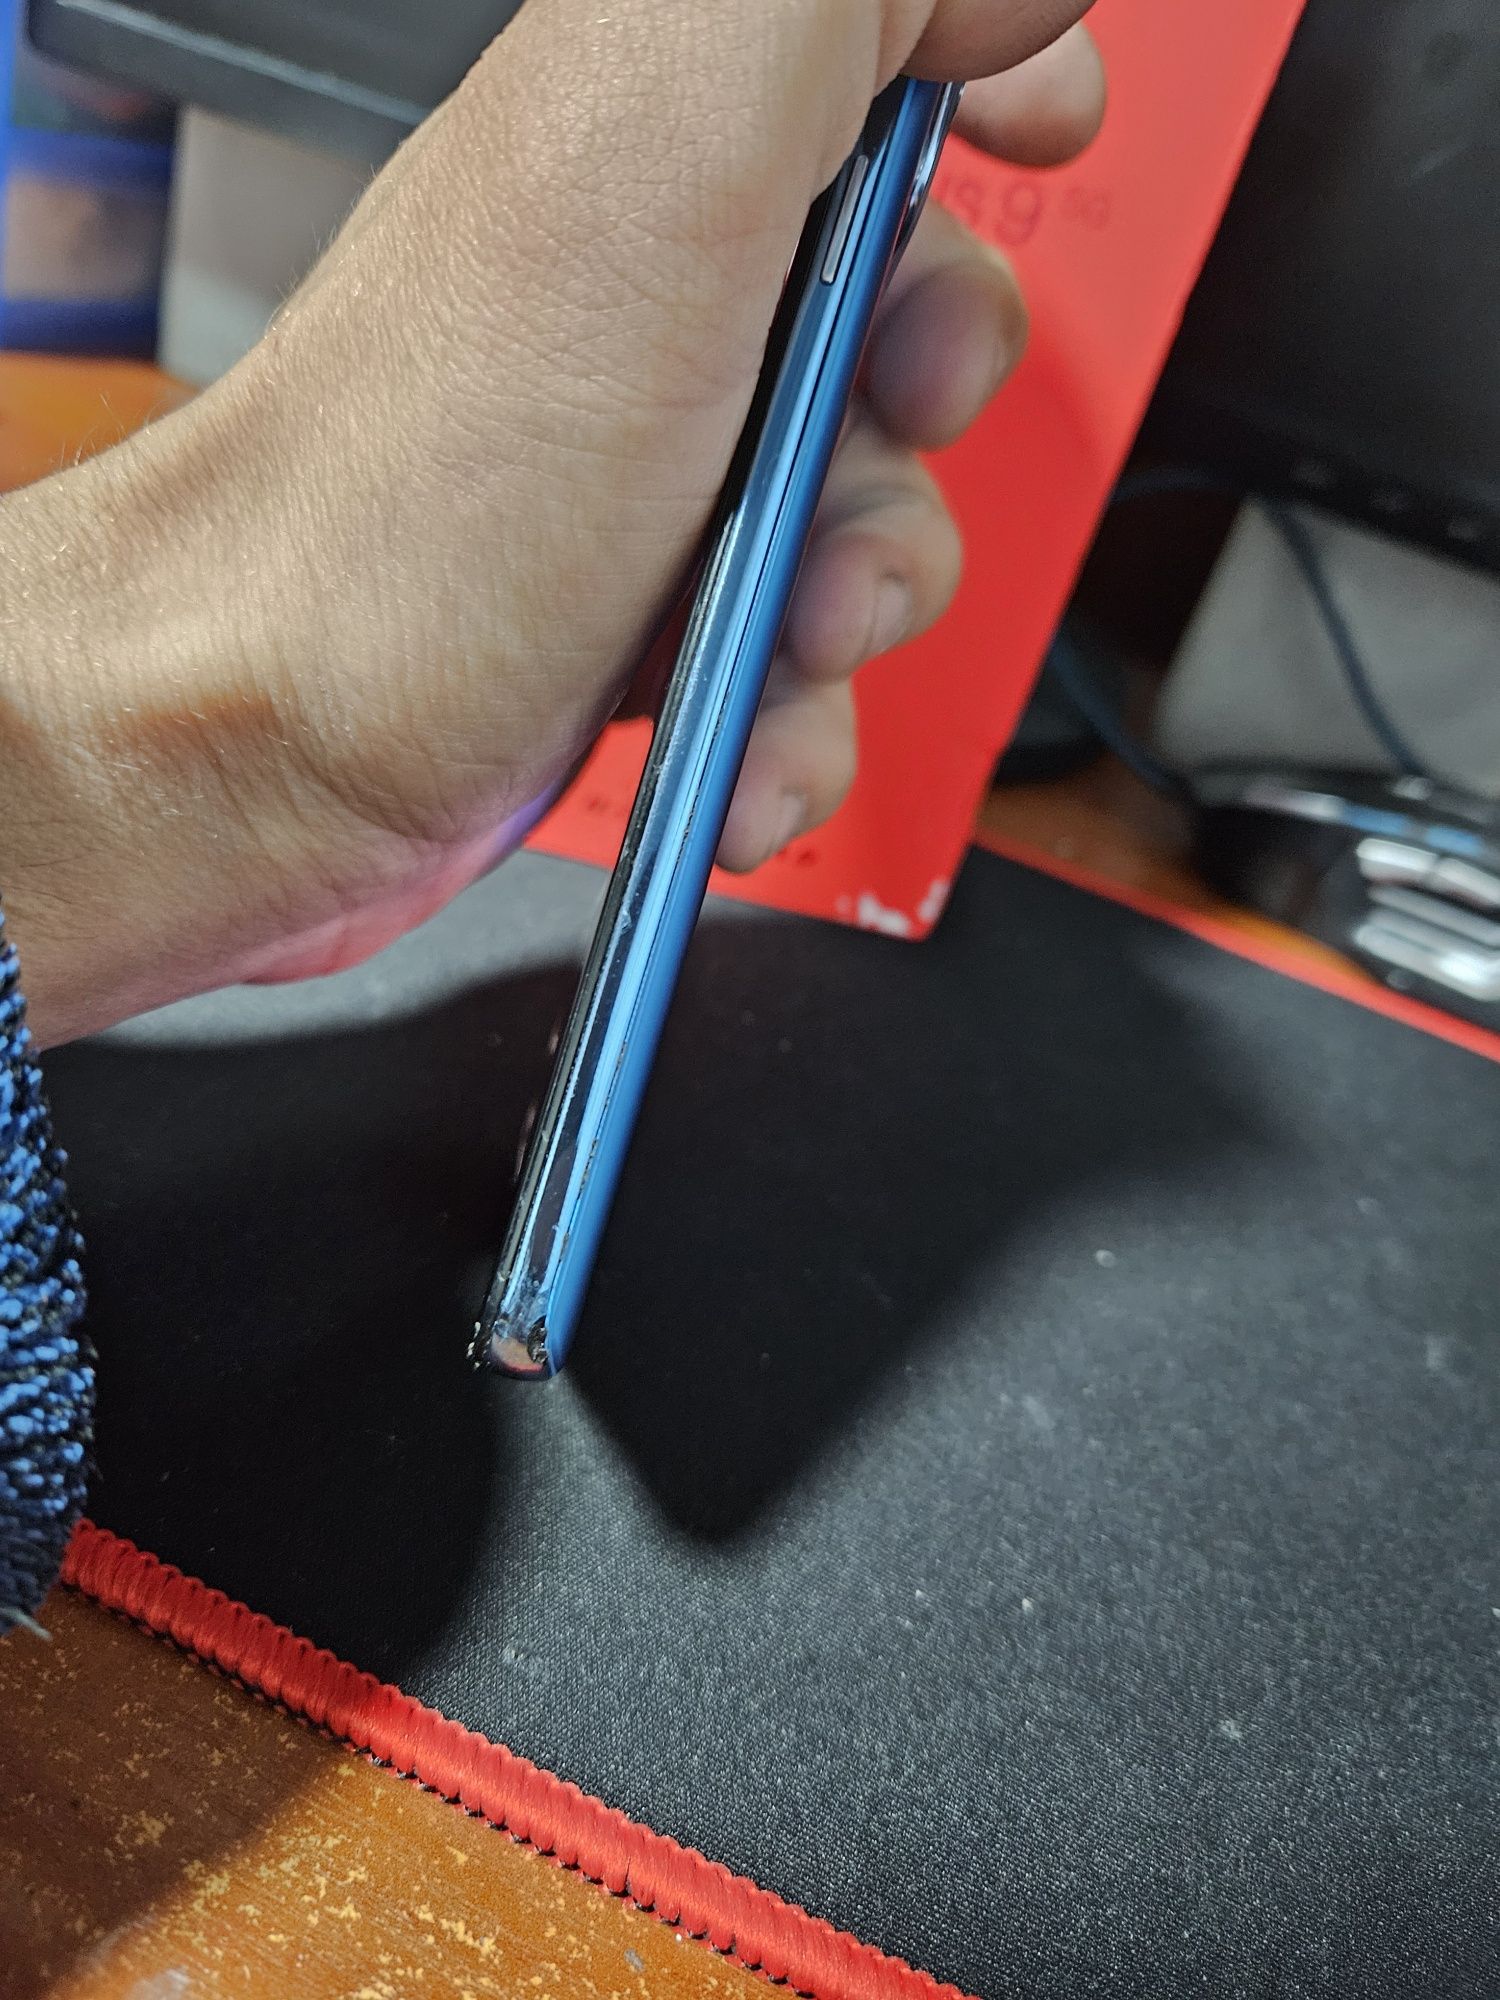 OnePlus 9 5g  12-256gB NFC